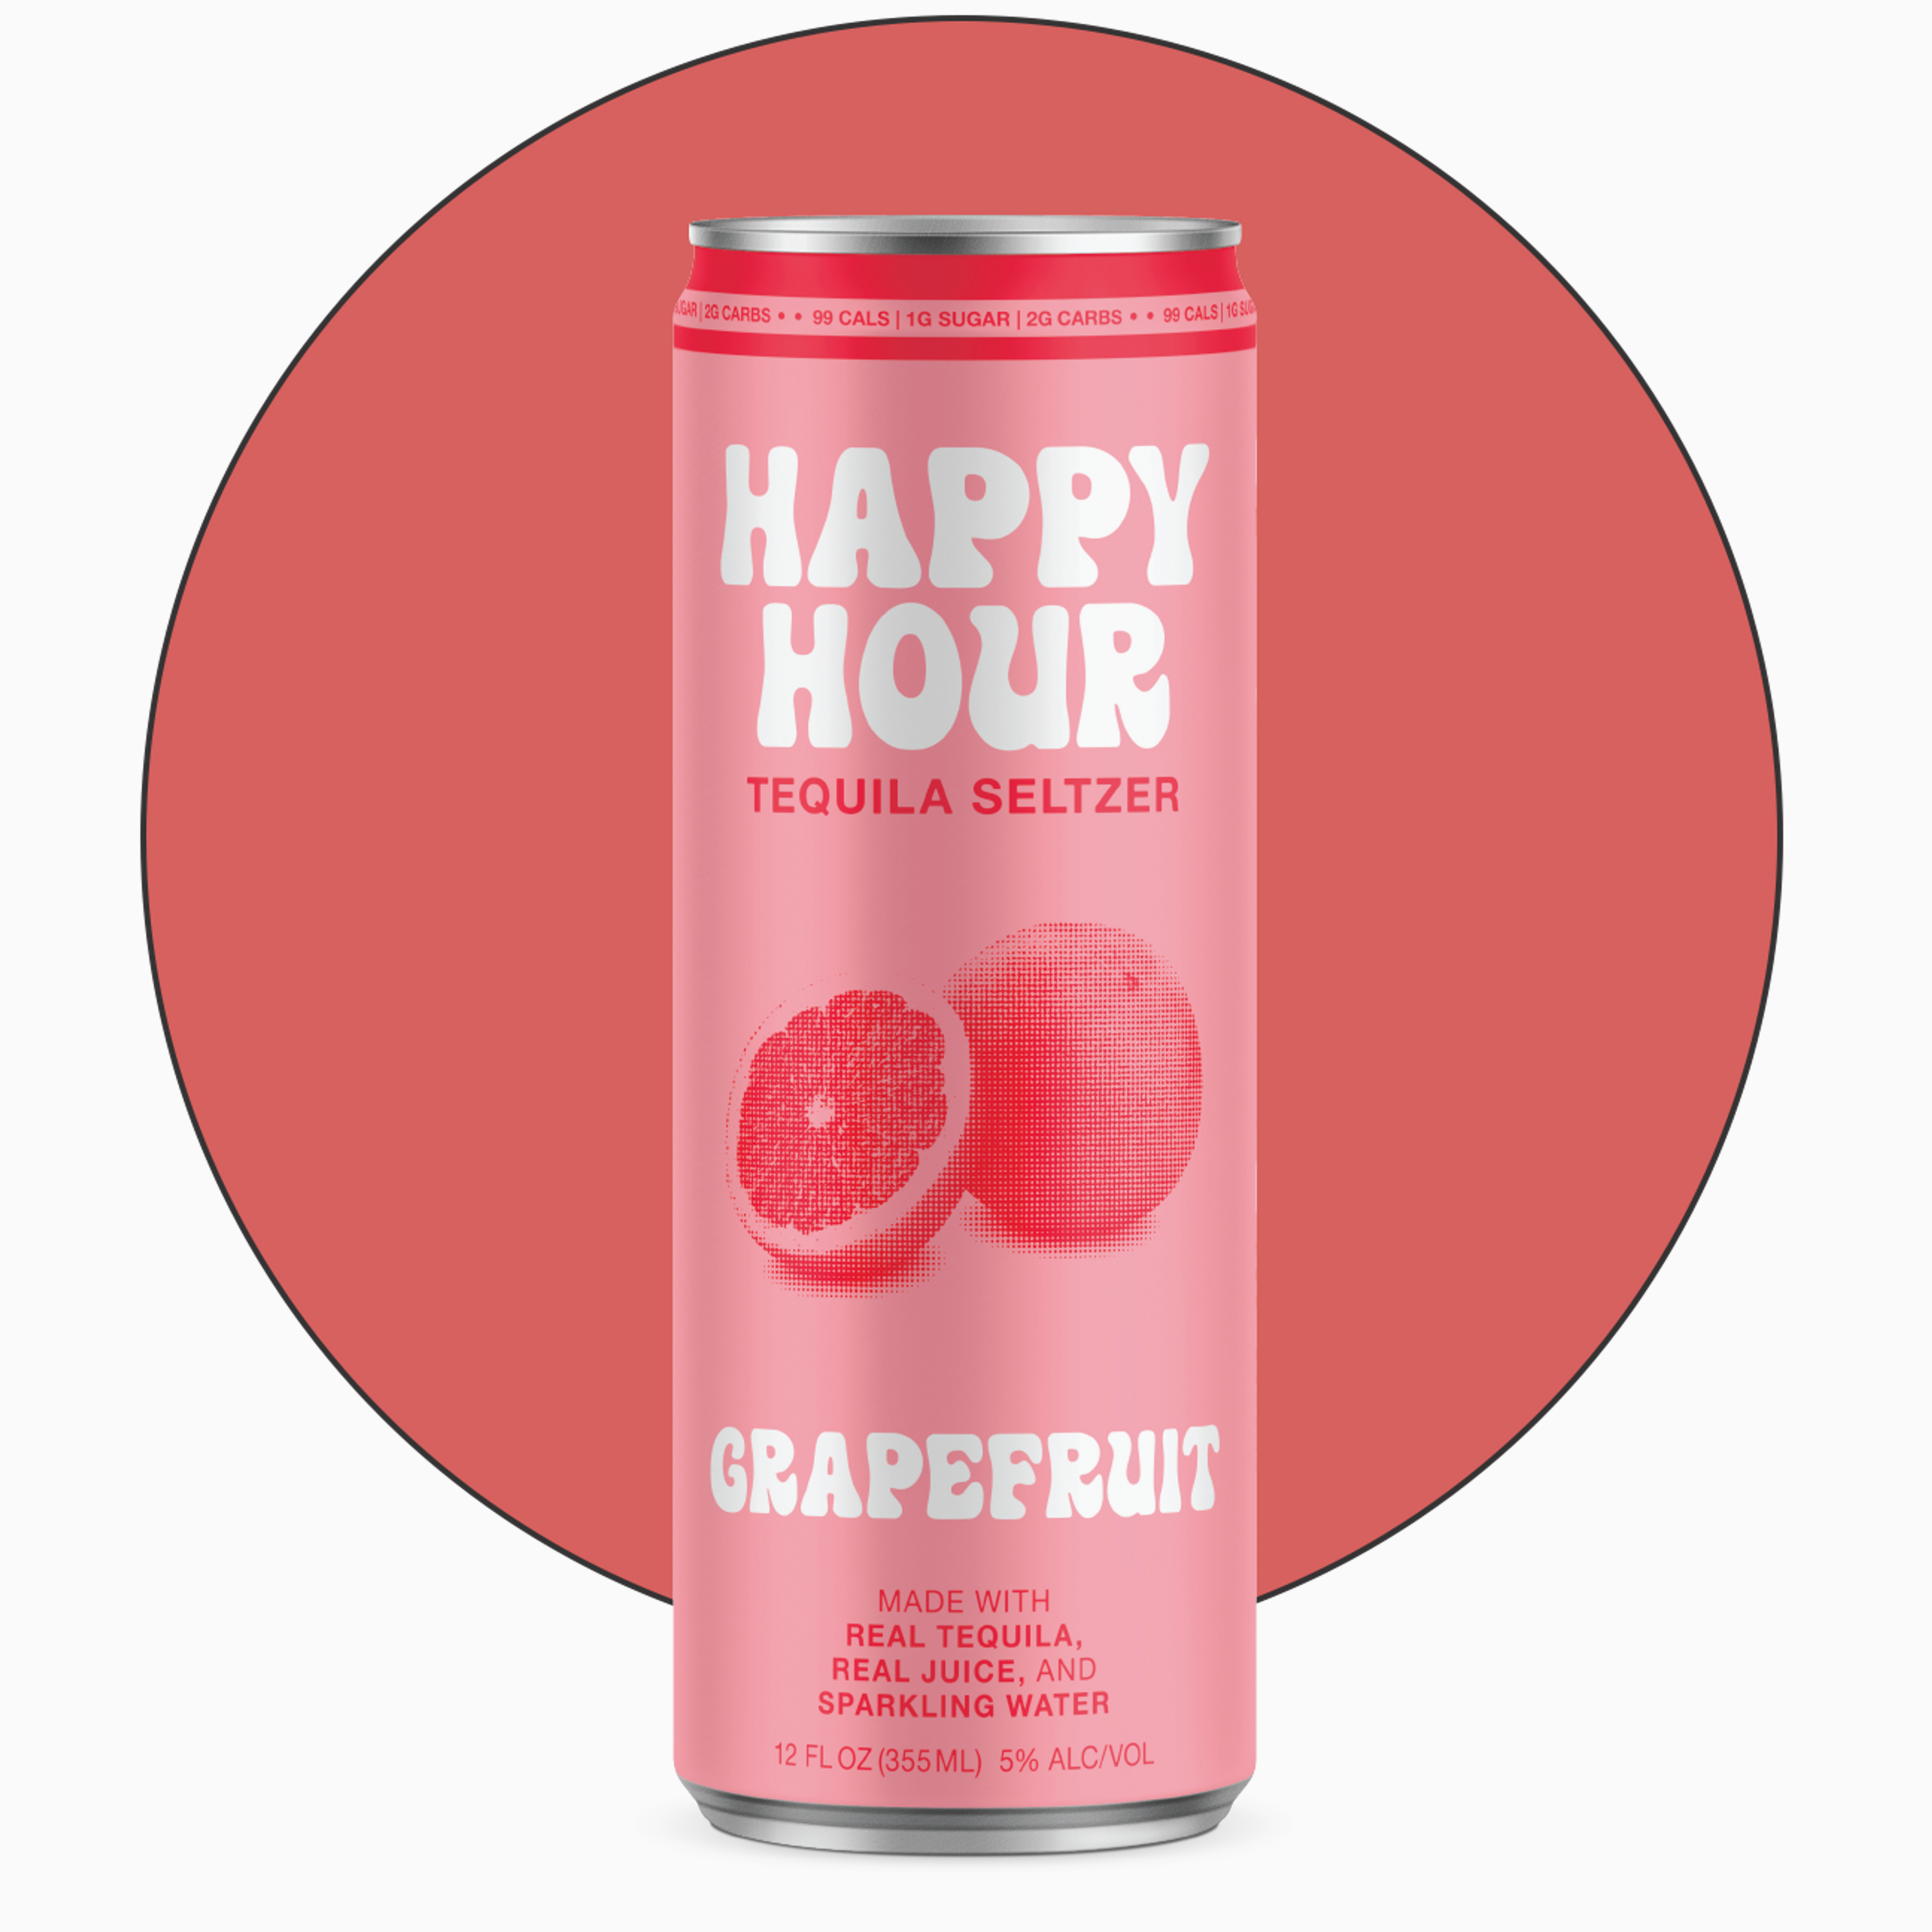 Happy Hour Grapefruit Tequila Seltzer 8-Pack